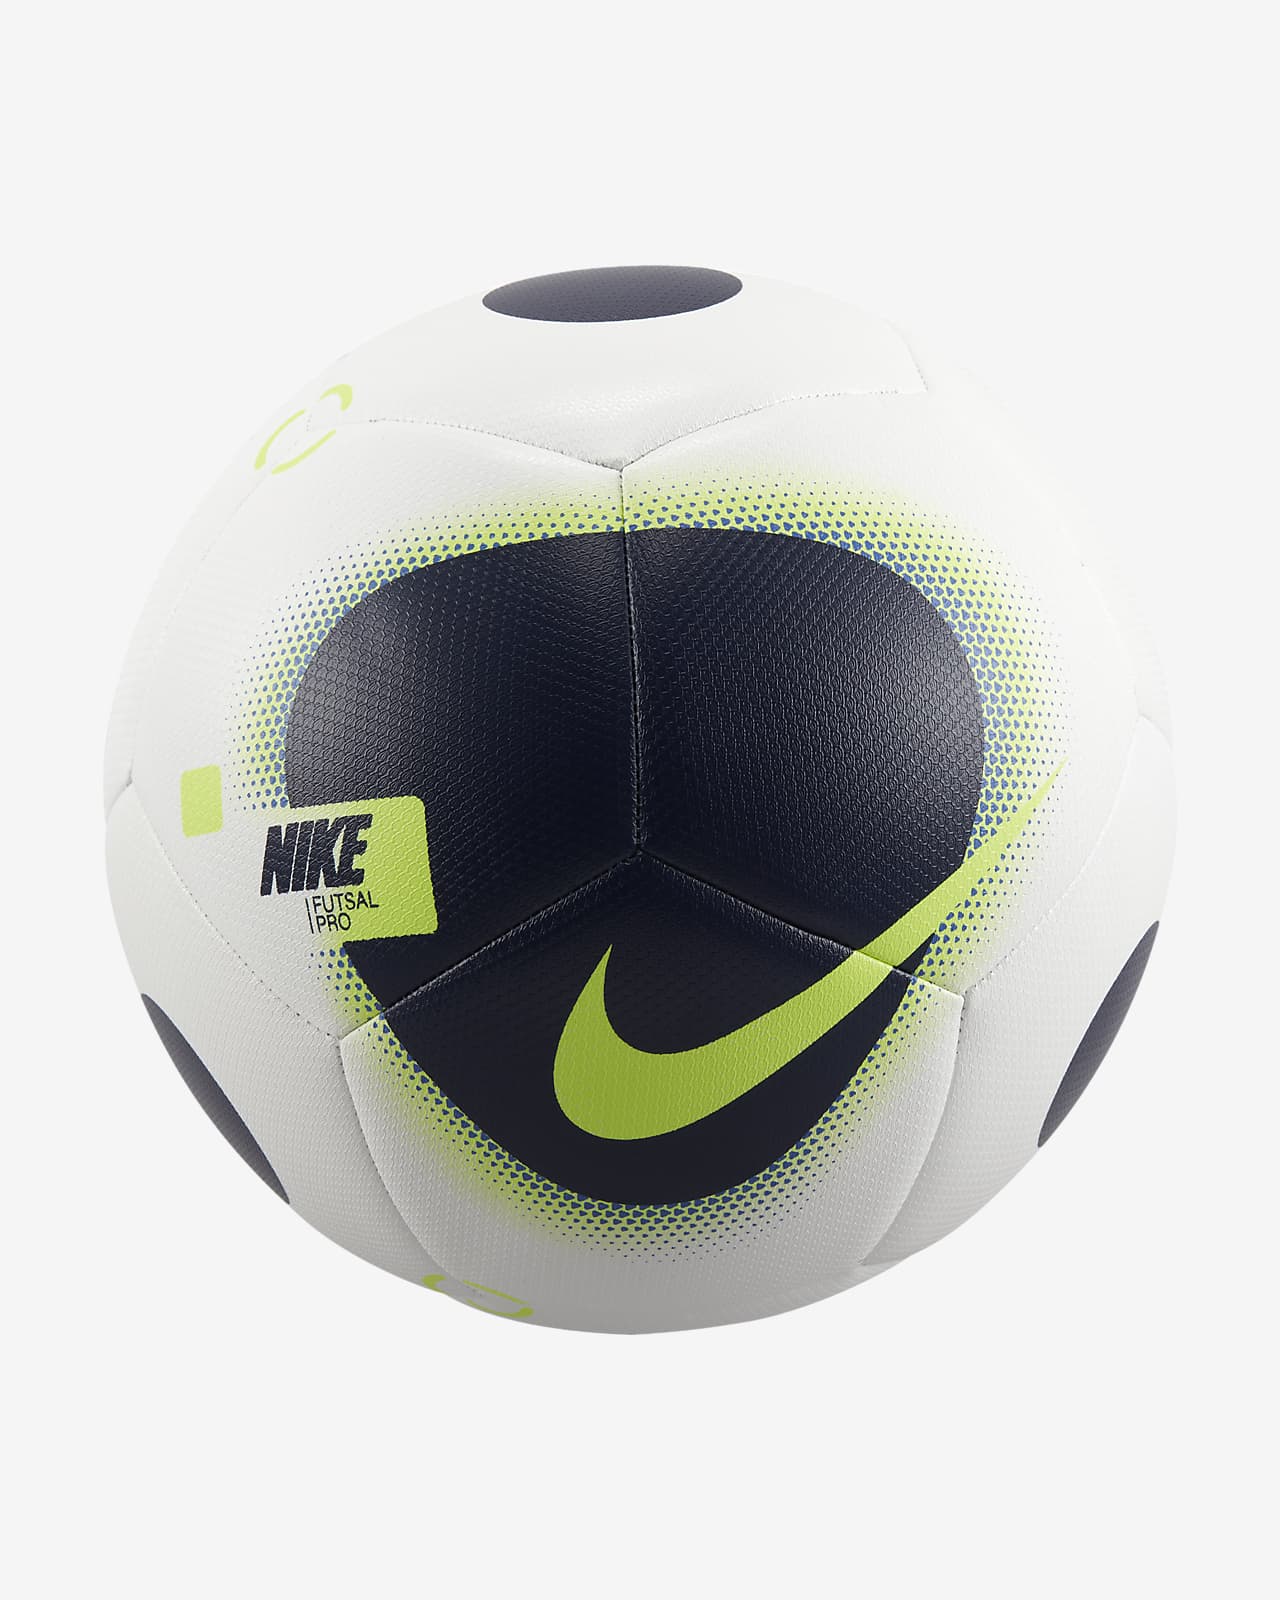 Футбольный мяч Nike Futsal Pro